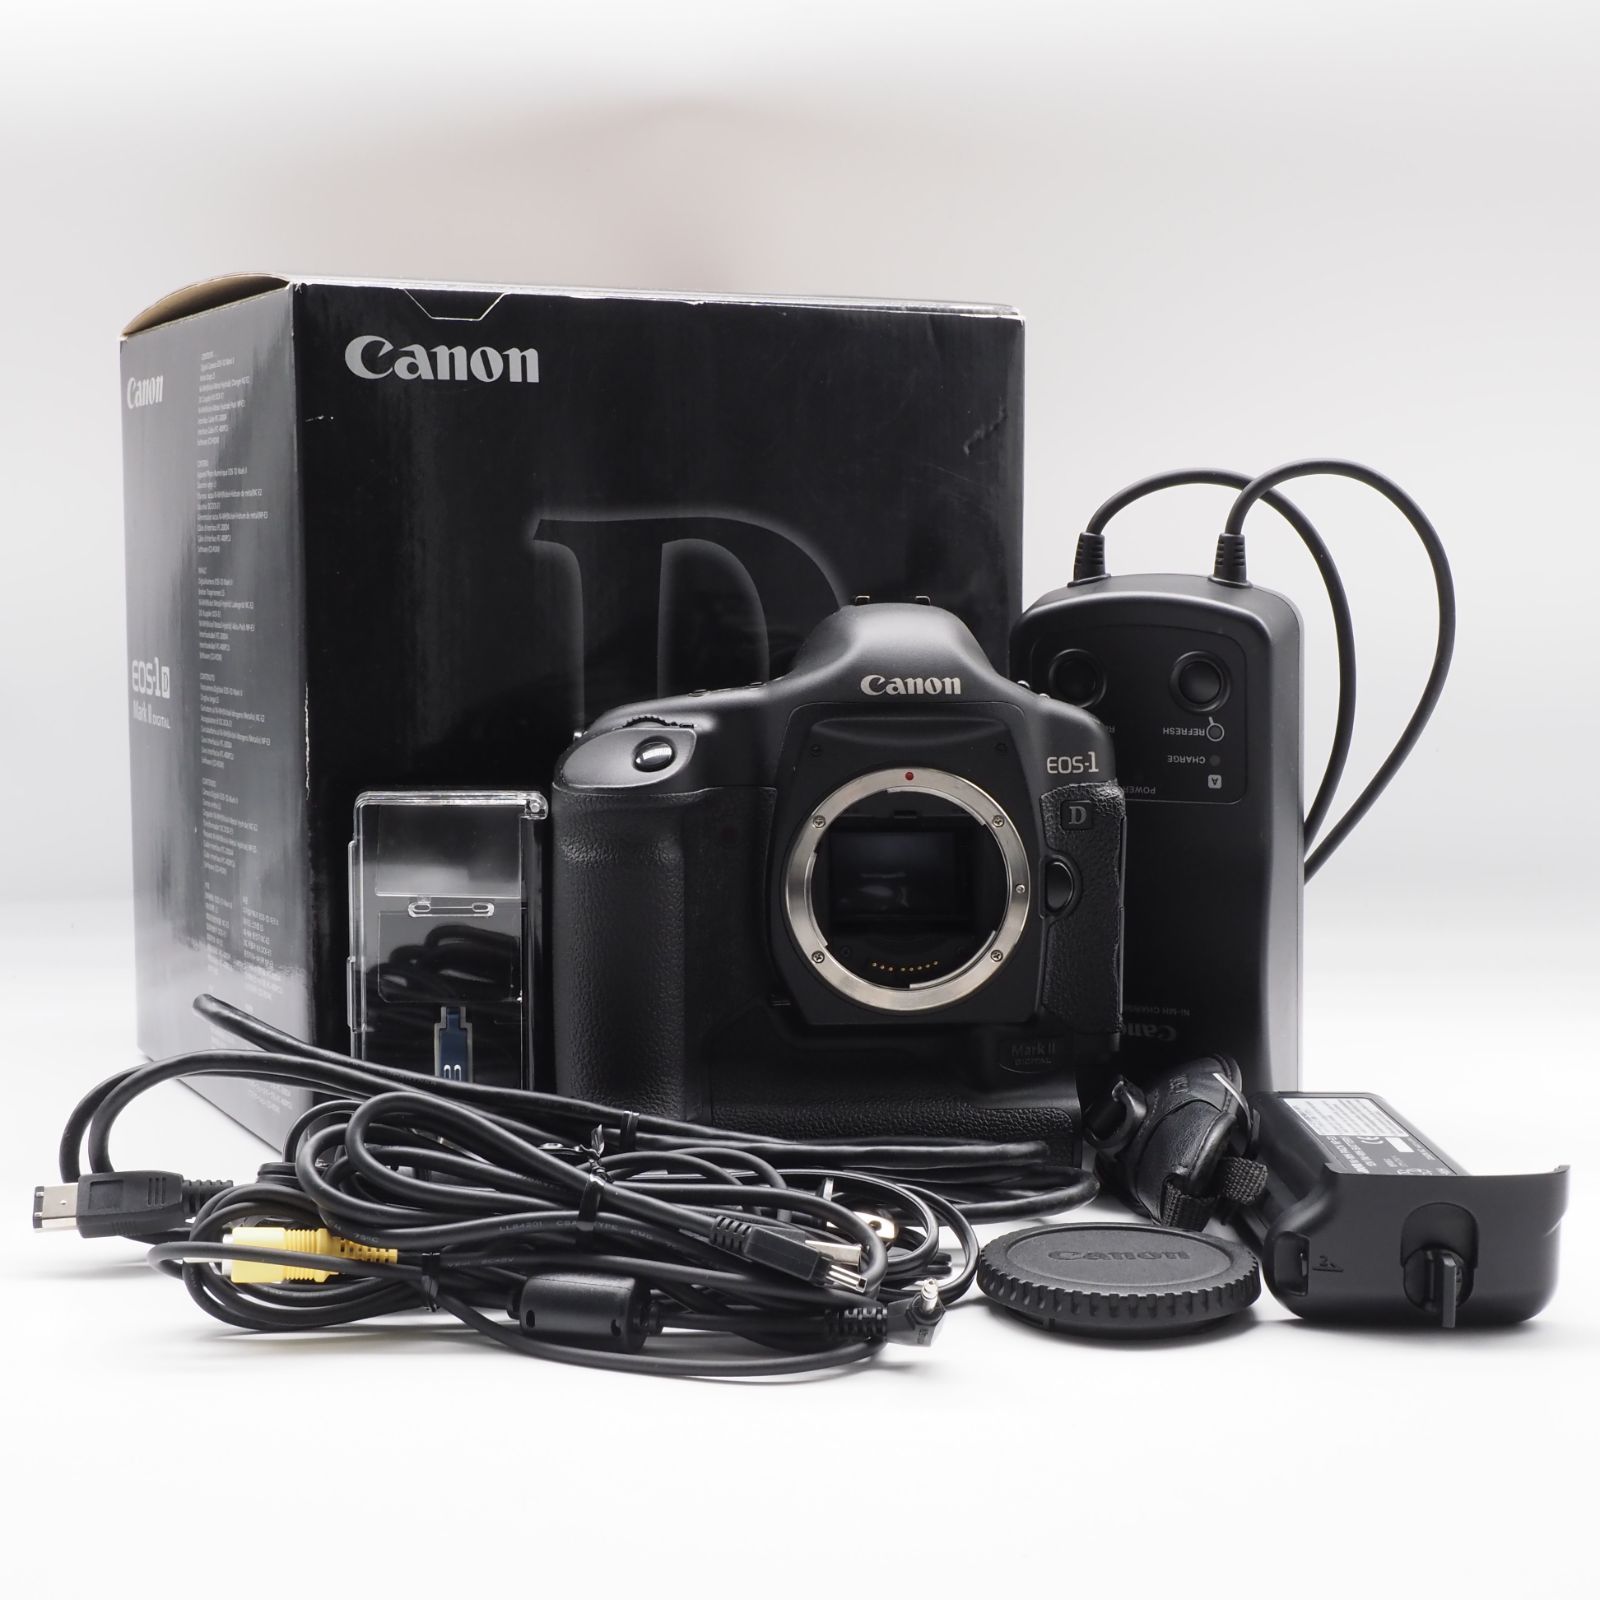 Canon EOS-1D Mark II ボディ #2676 - メルカリ